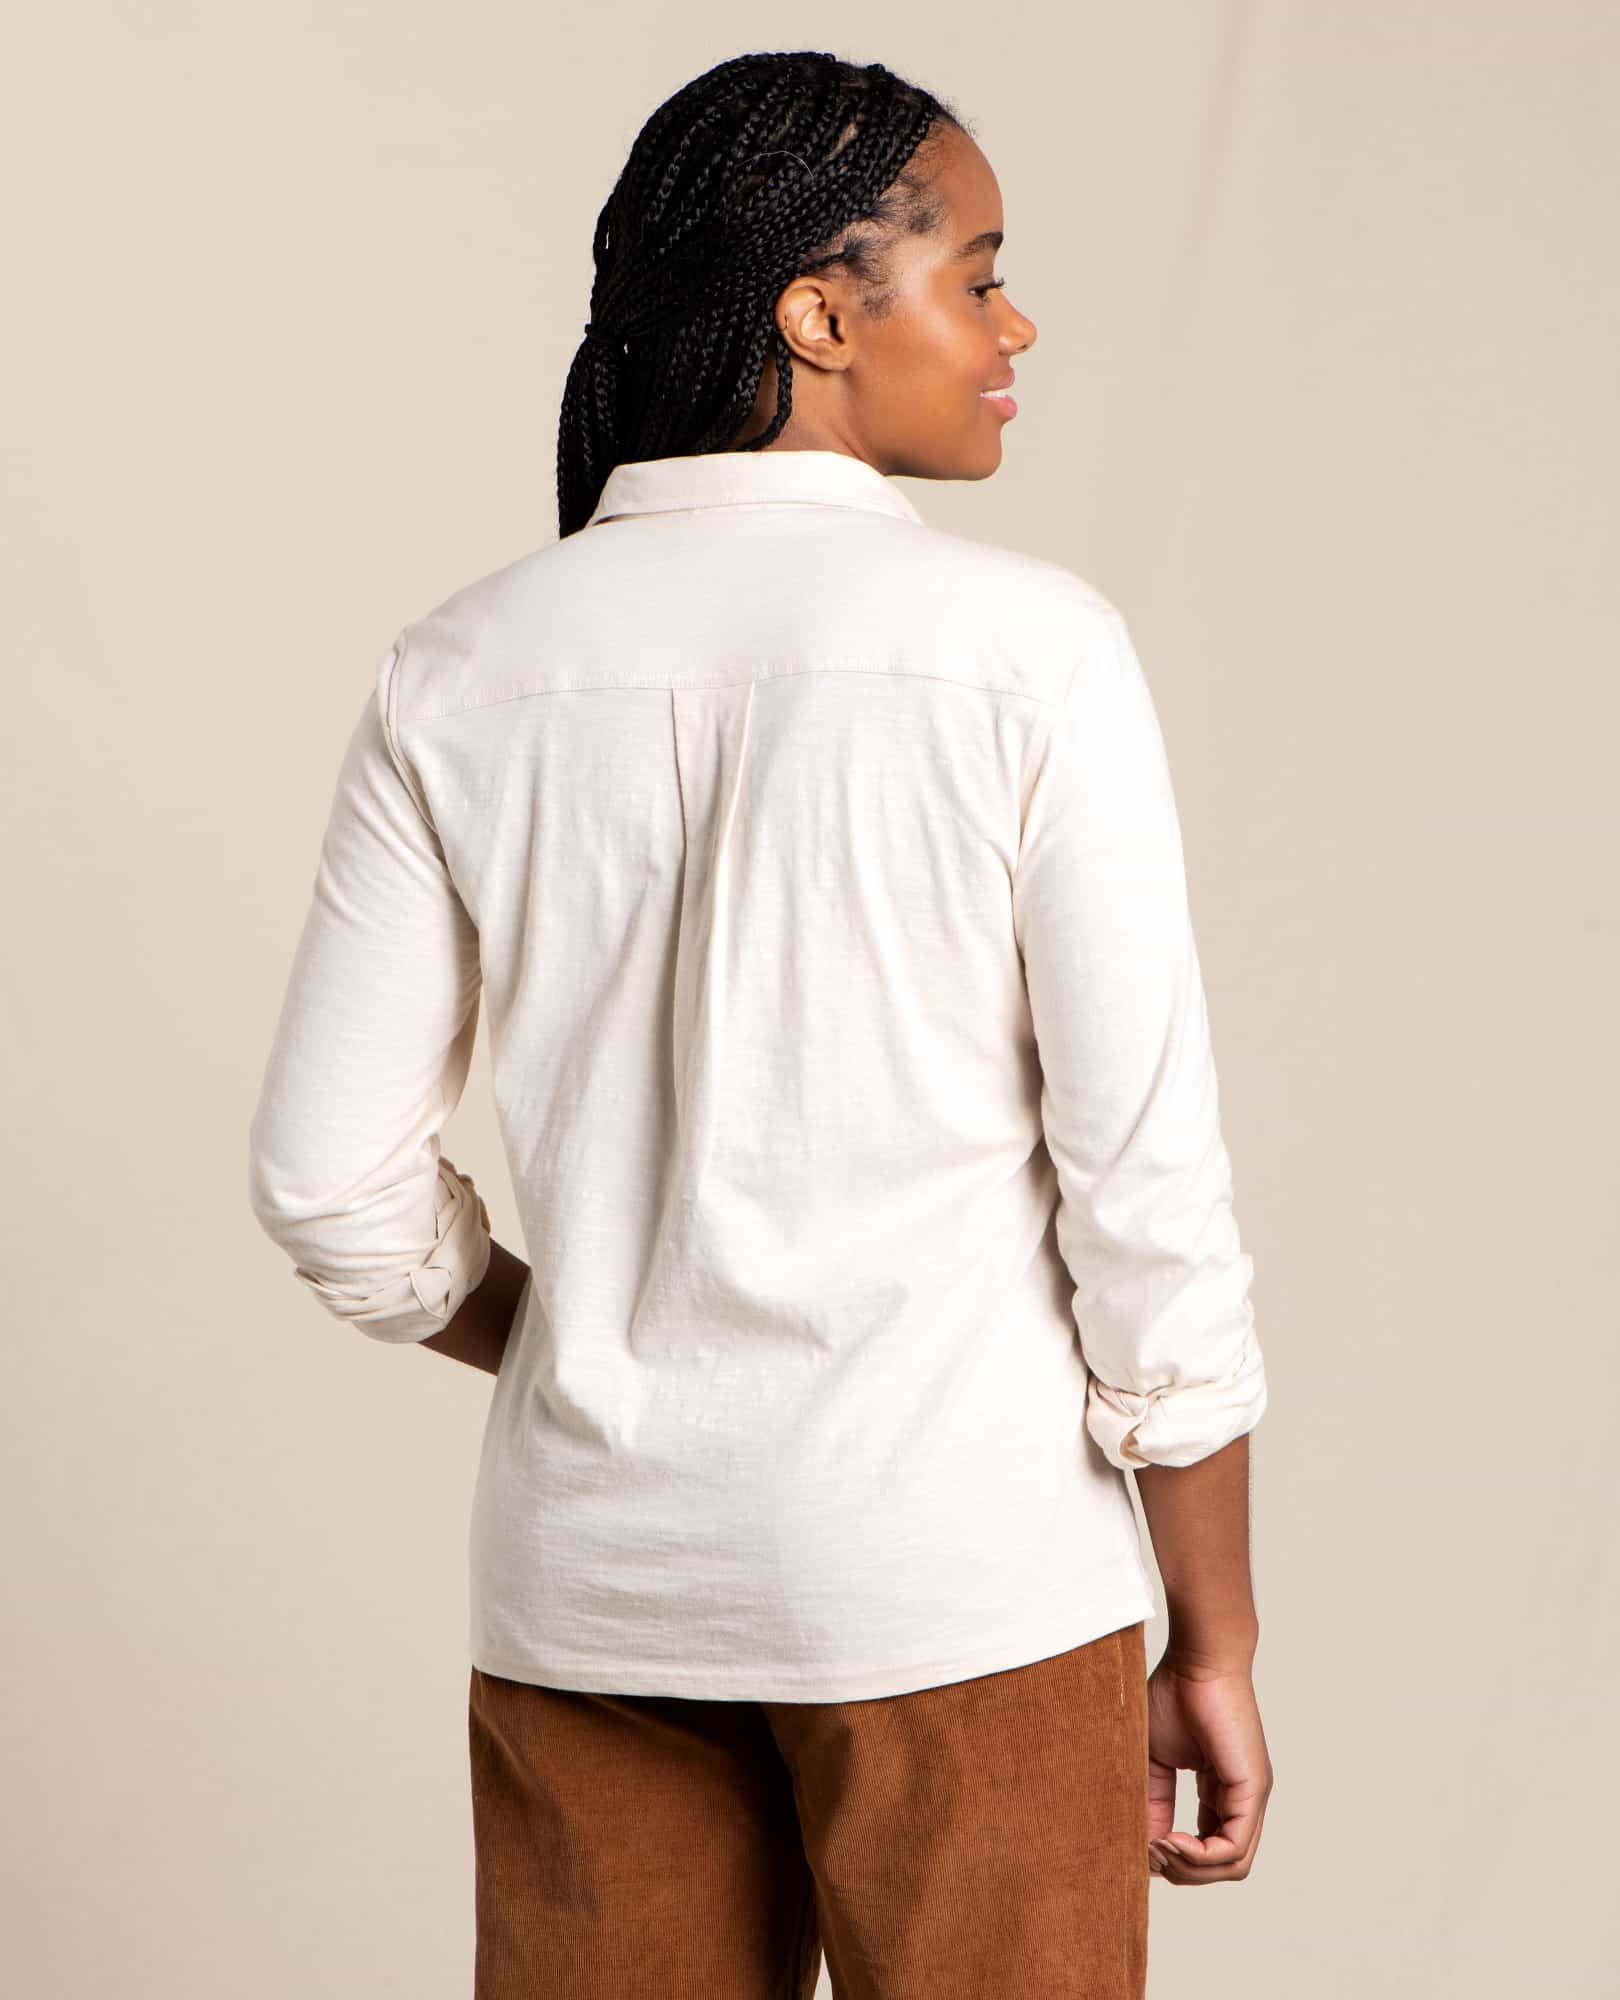 Women's Primero Long Sleeve Shirt